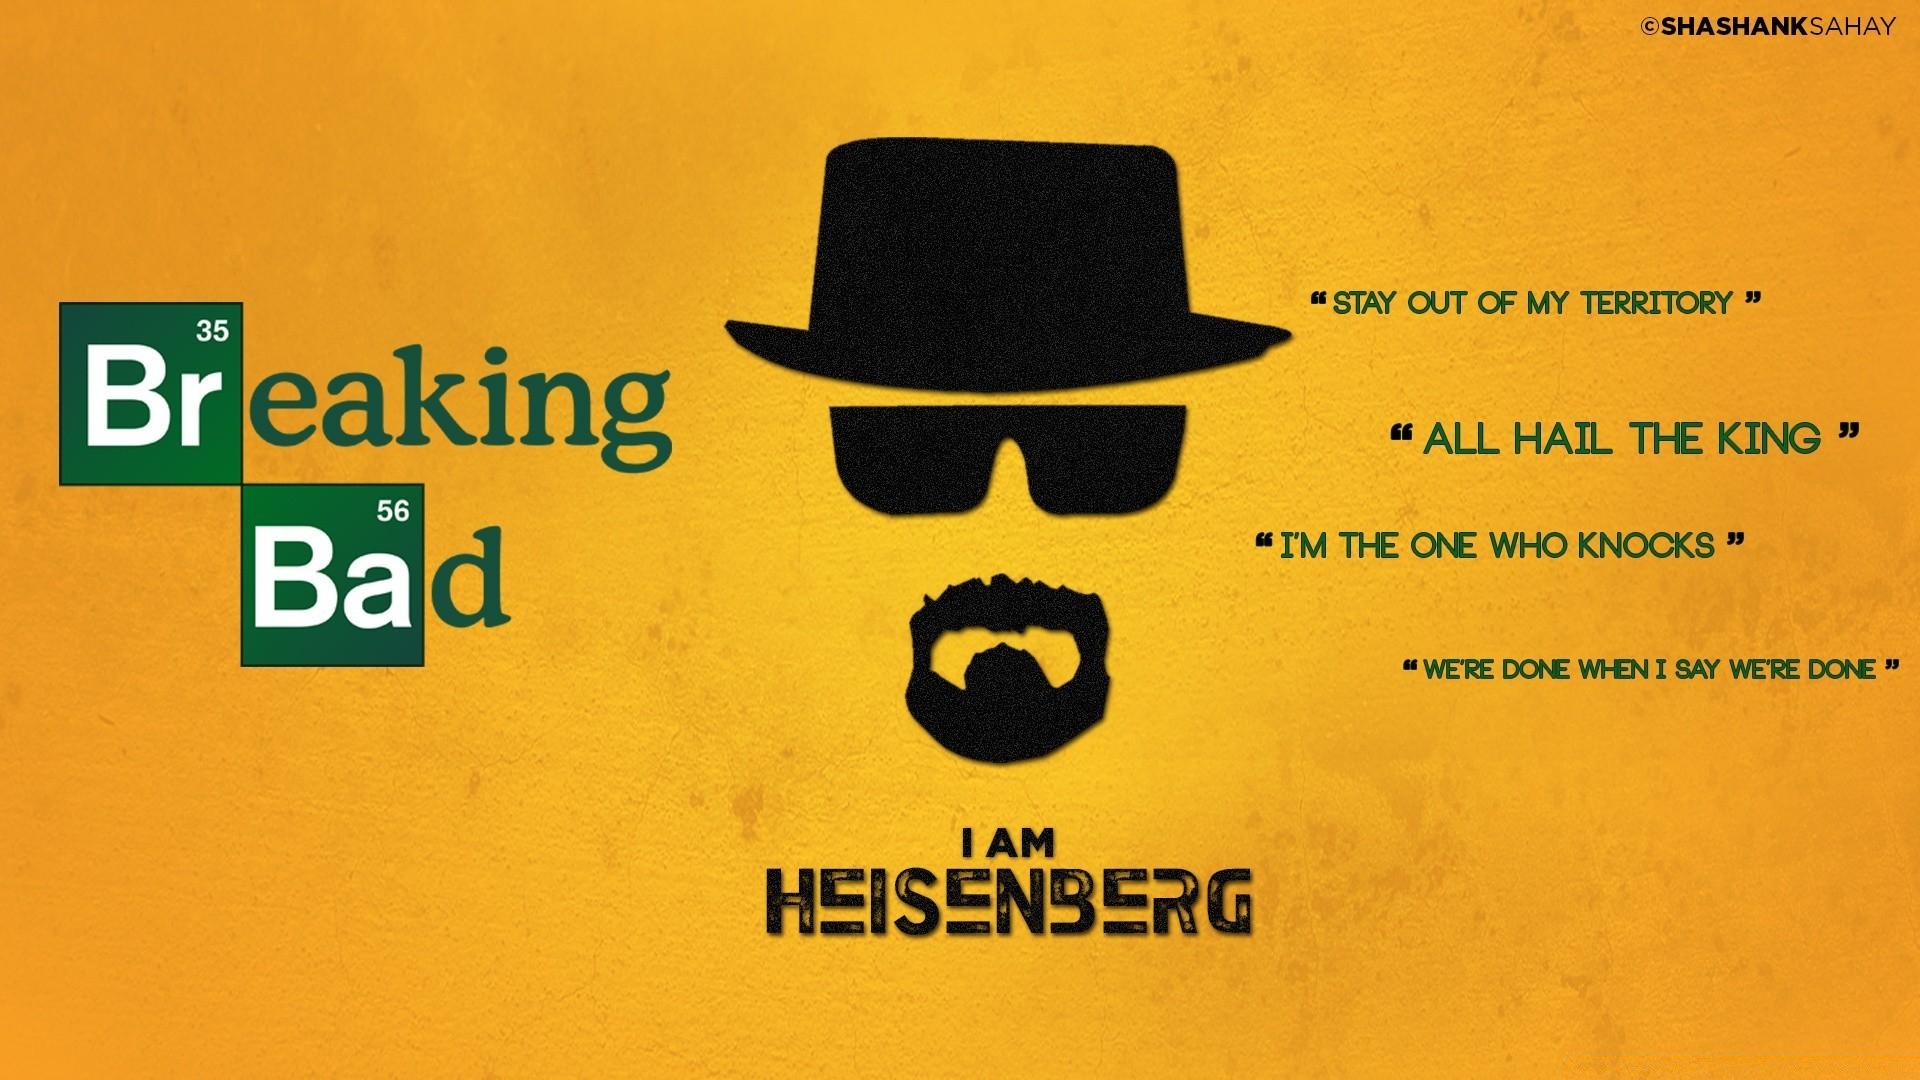 Heisenberg Breaking Bad. iPhone wallpaper for free